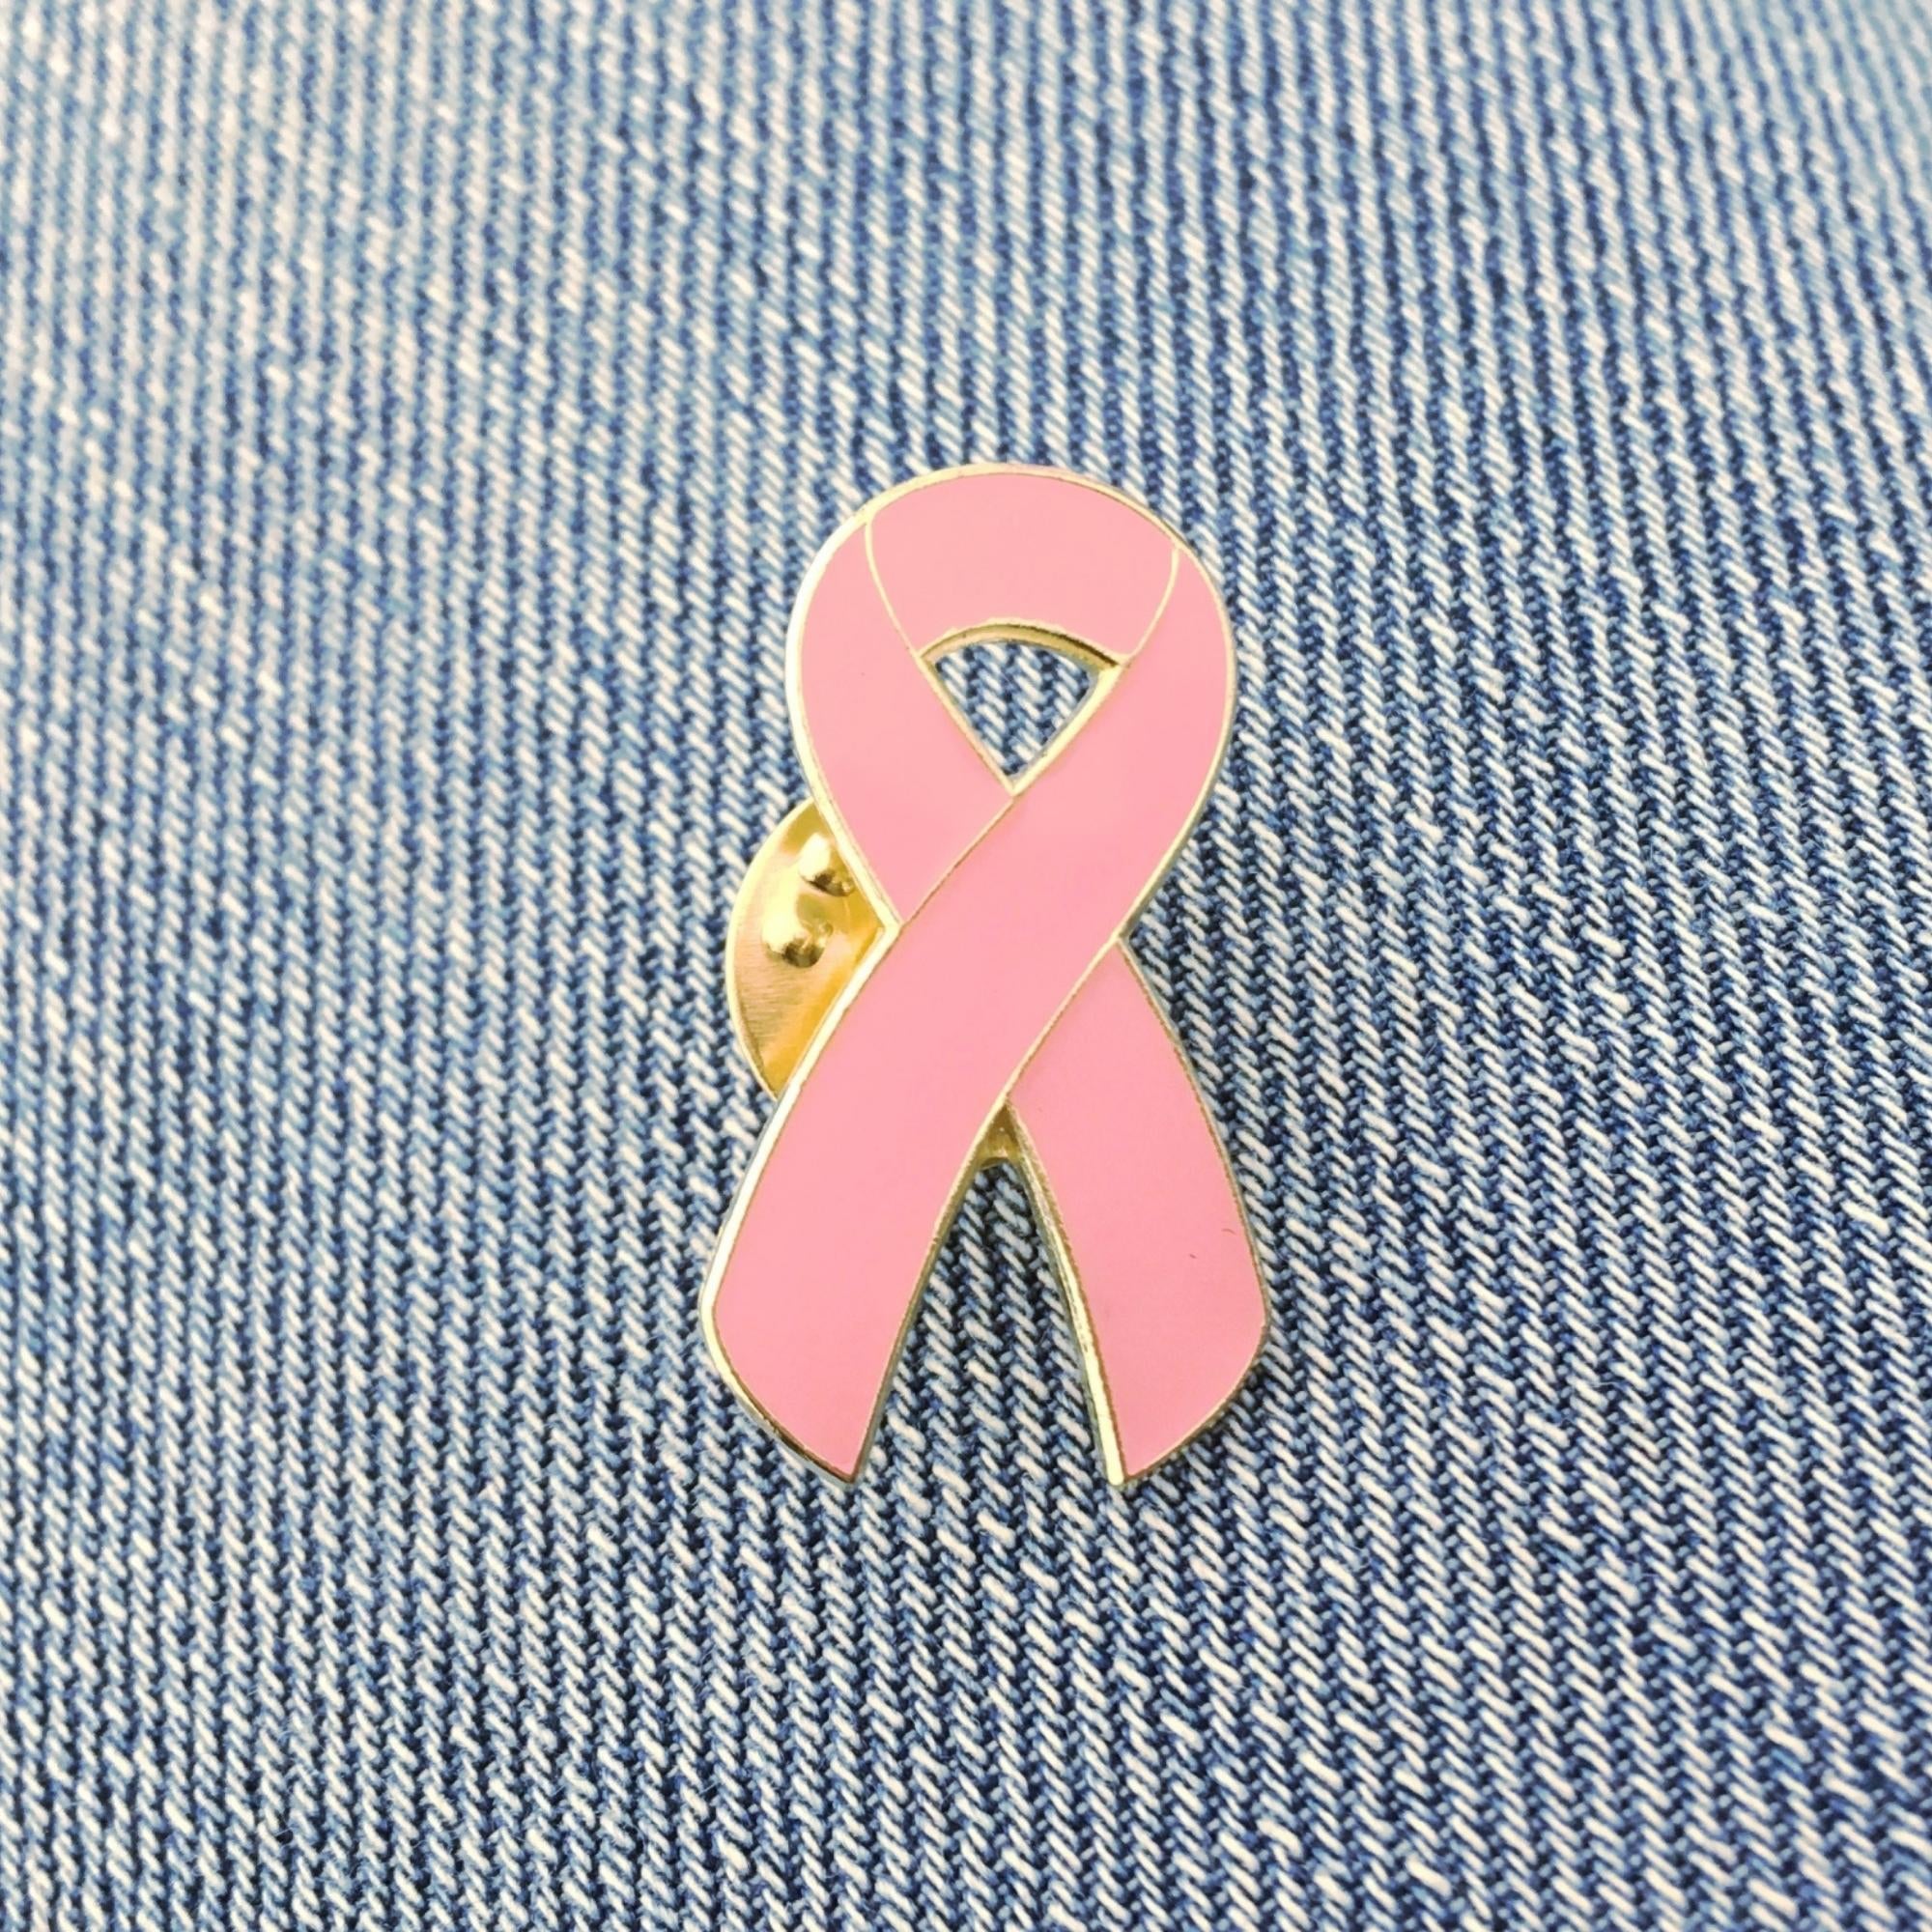 breast cancer awareness ribbon pin survivor support